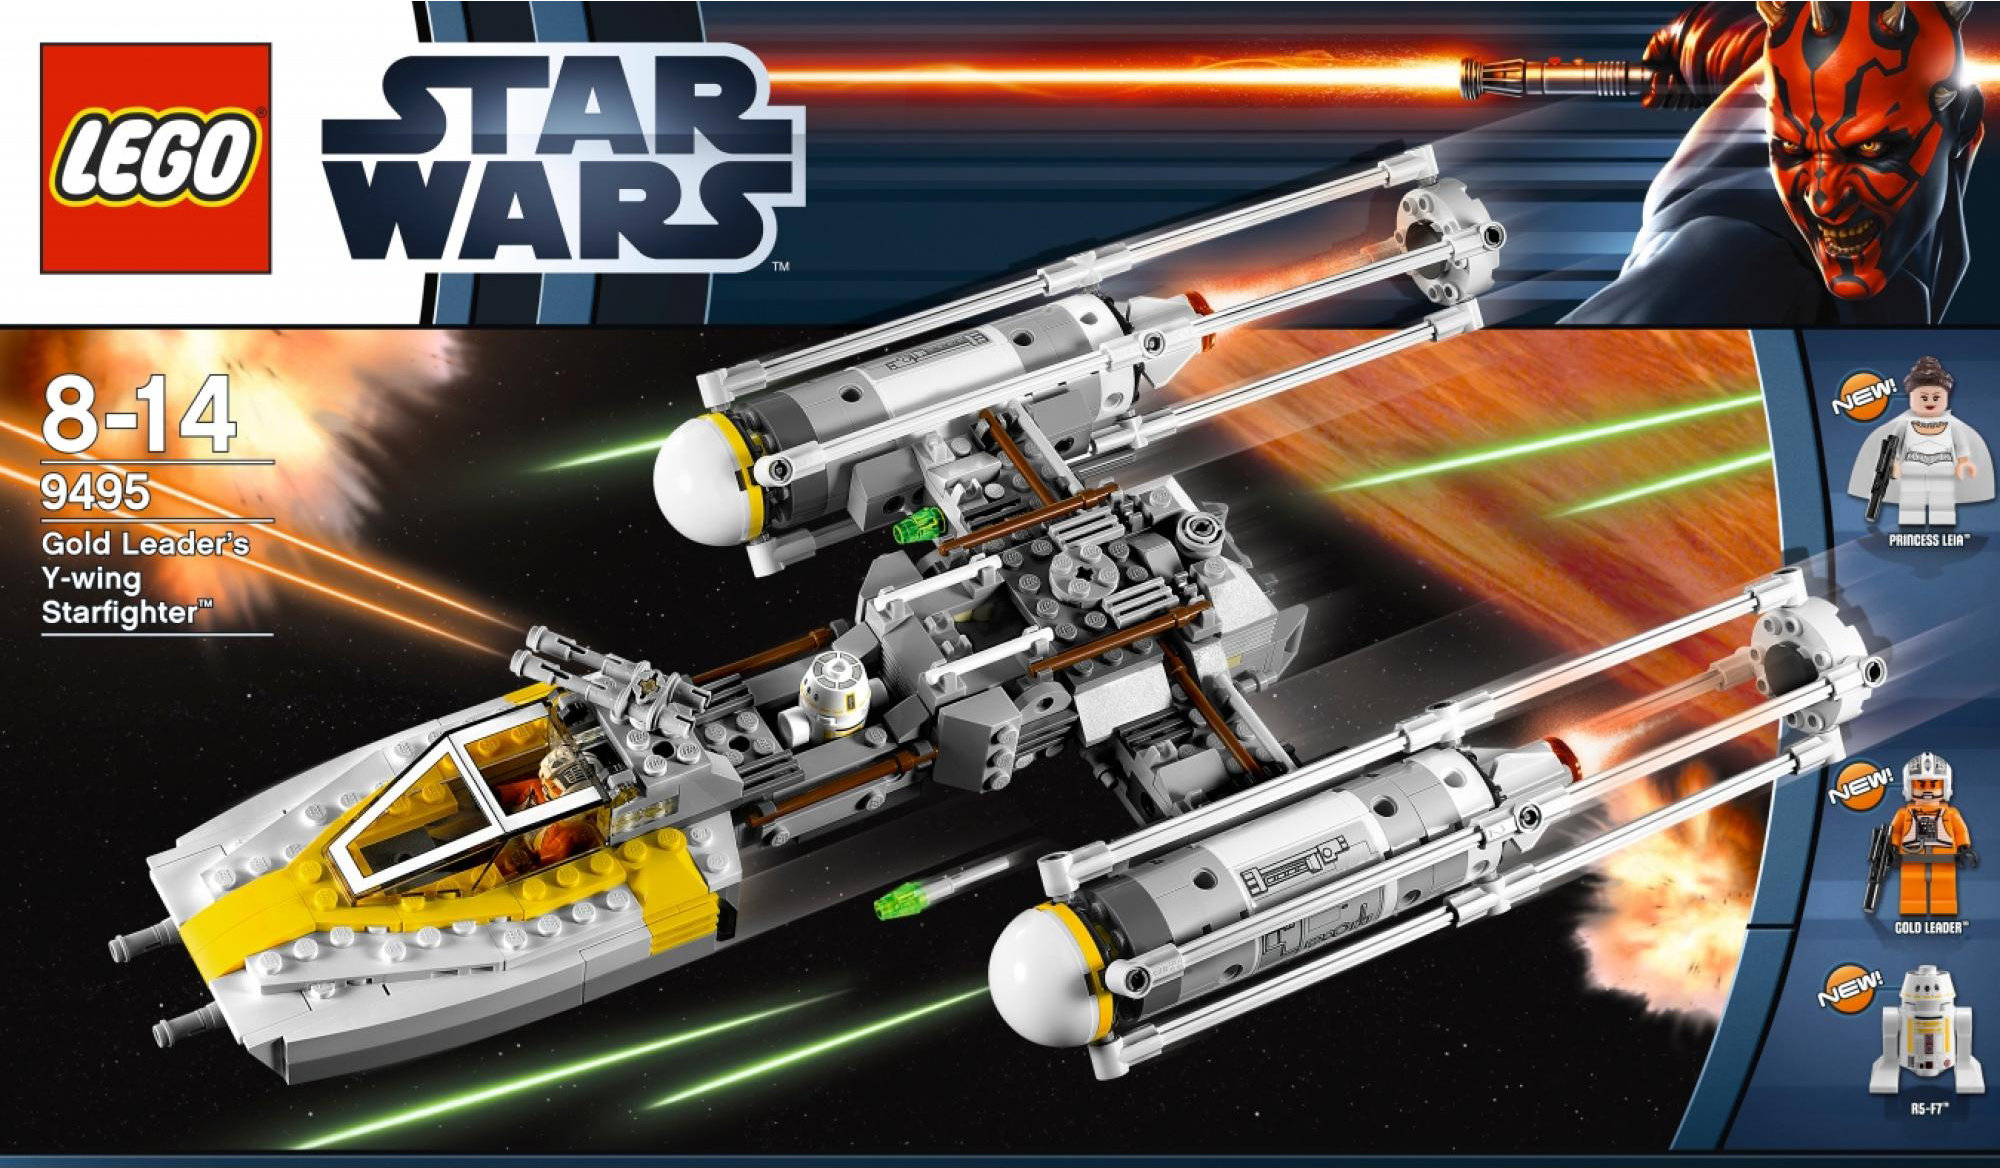 LEGO-Star-Wars-9495-Gold-Leaders-Y-wing-Starfighter.jpg